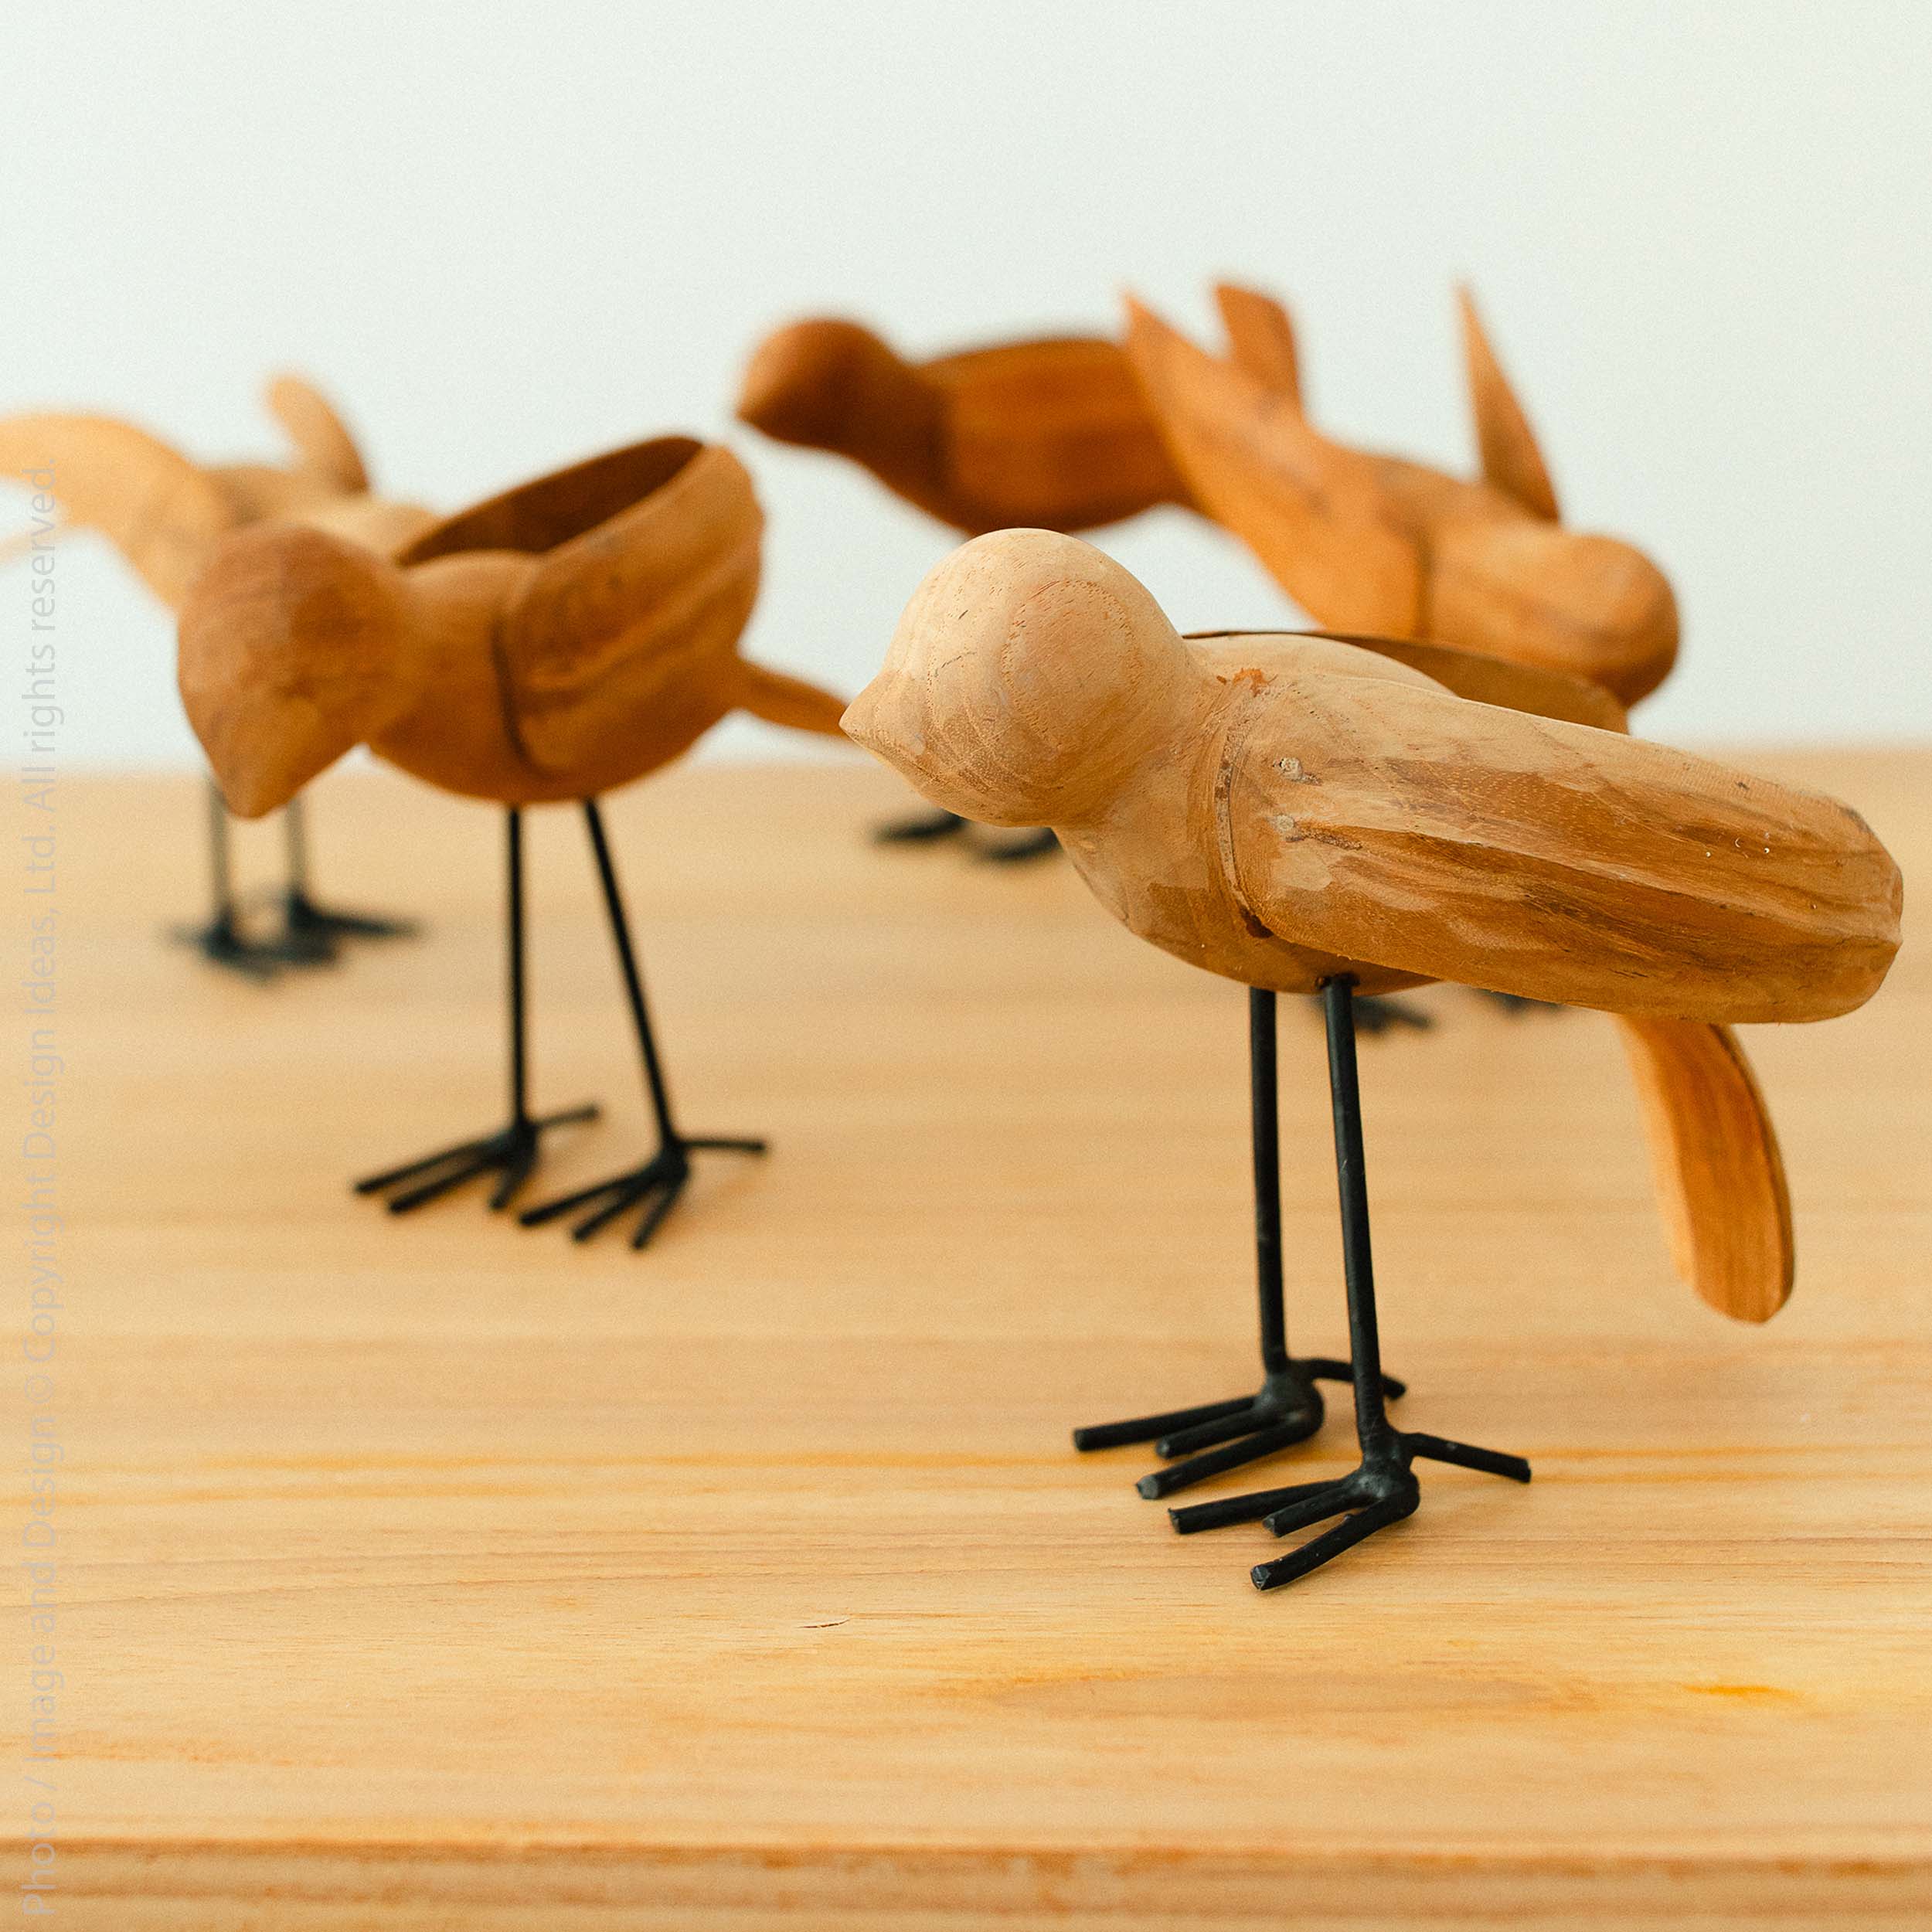 Deseo™ Teak Decorative Bird (set of 6)